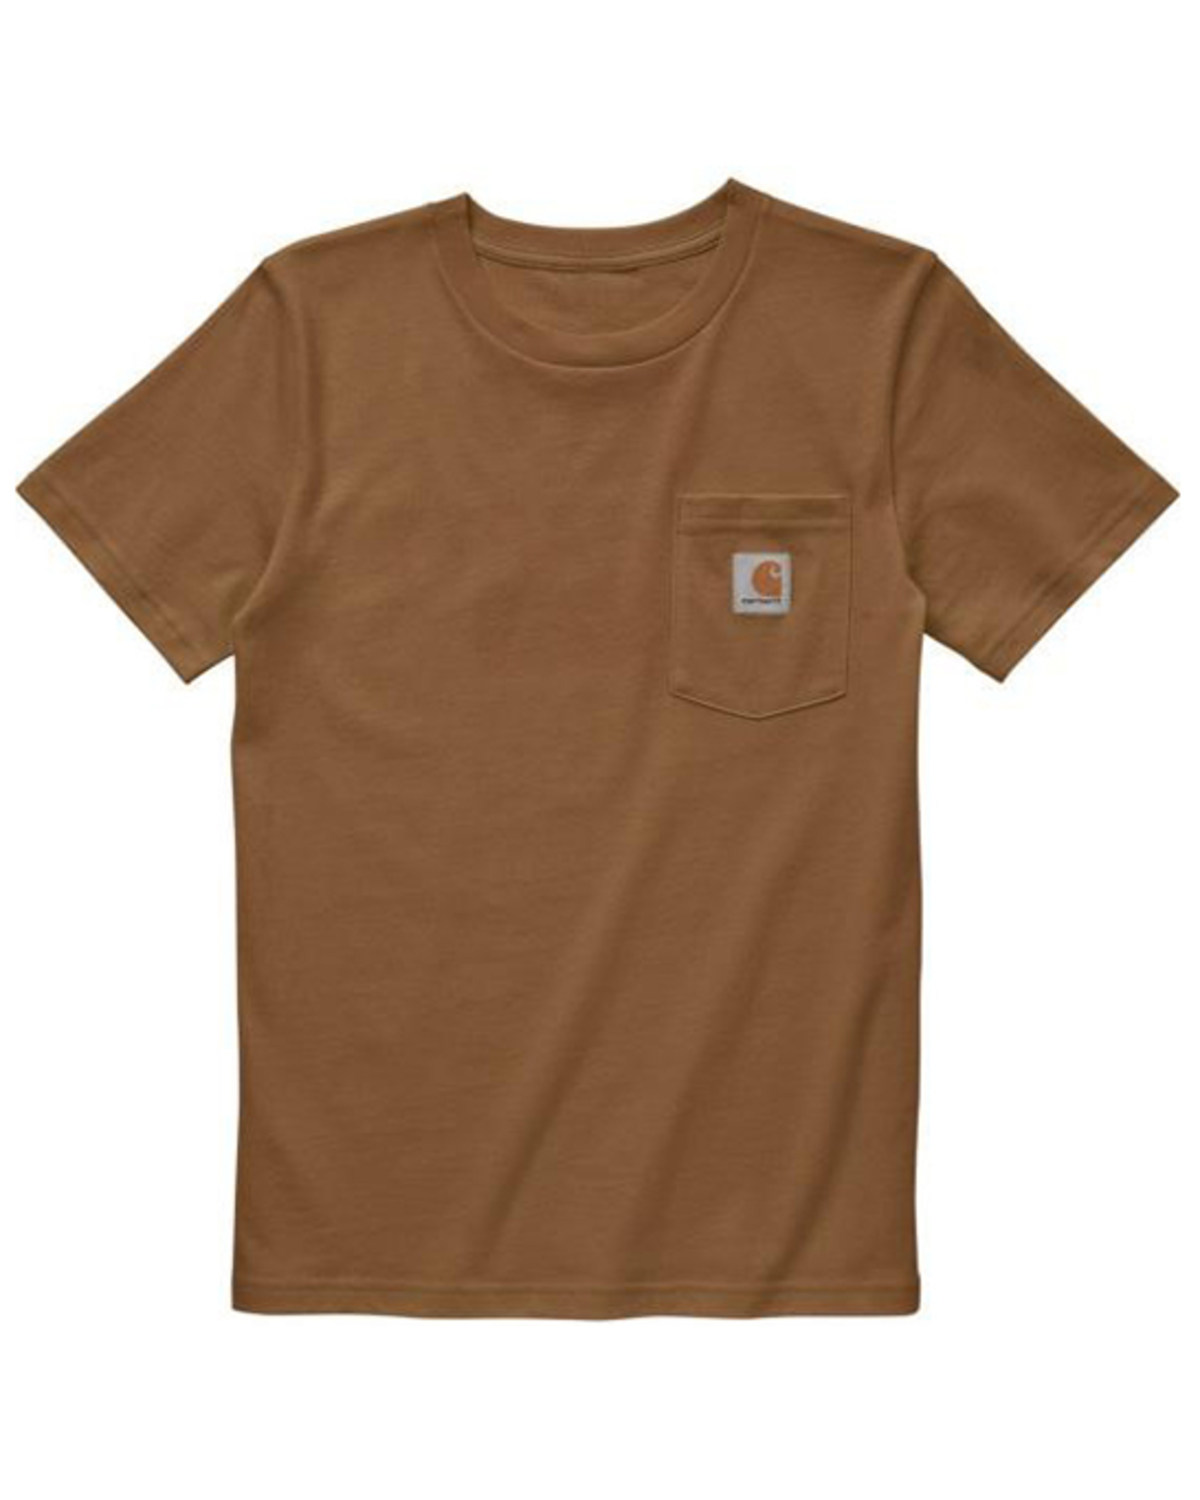 Carhartt Boys' Logo Pocket T-Shirt - Sizes 4-7